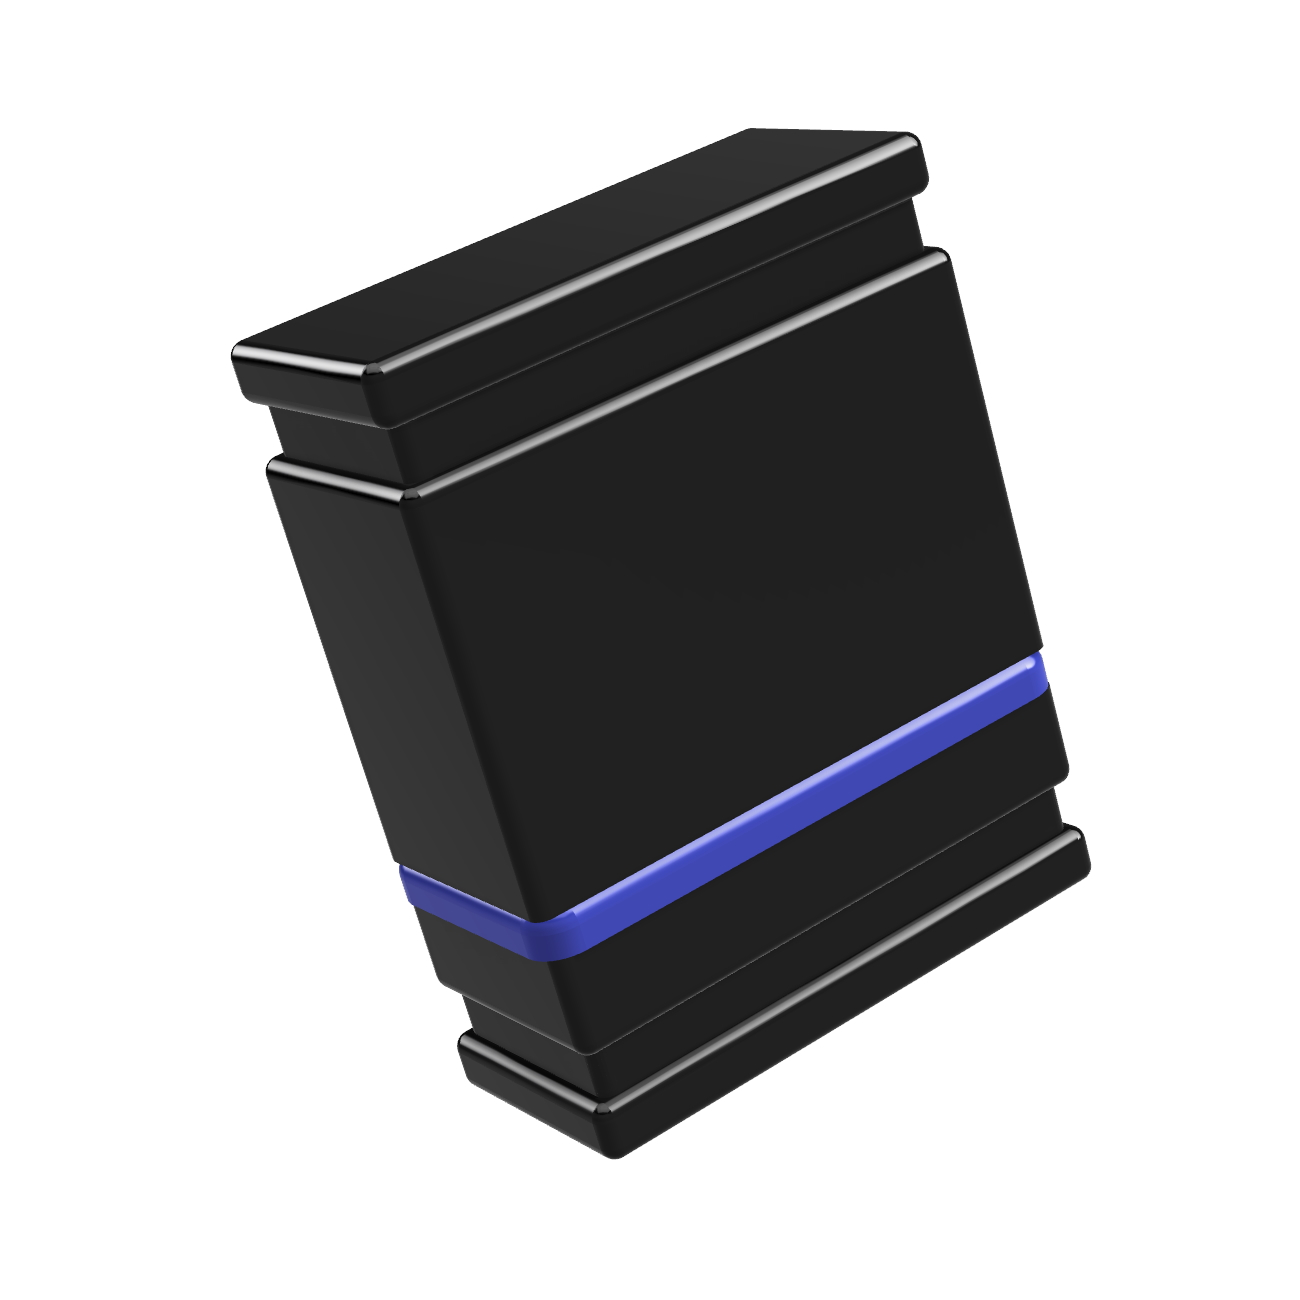 GERMANY P1 (Schwarz/Blau, 8 USB-Stick Mini GB) ®ULTRA USB